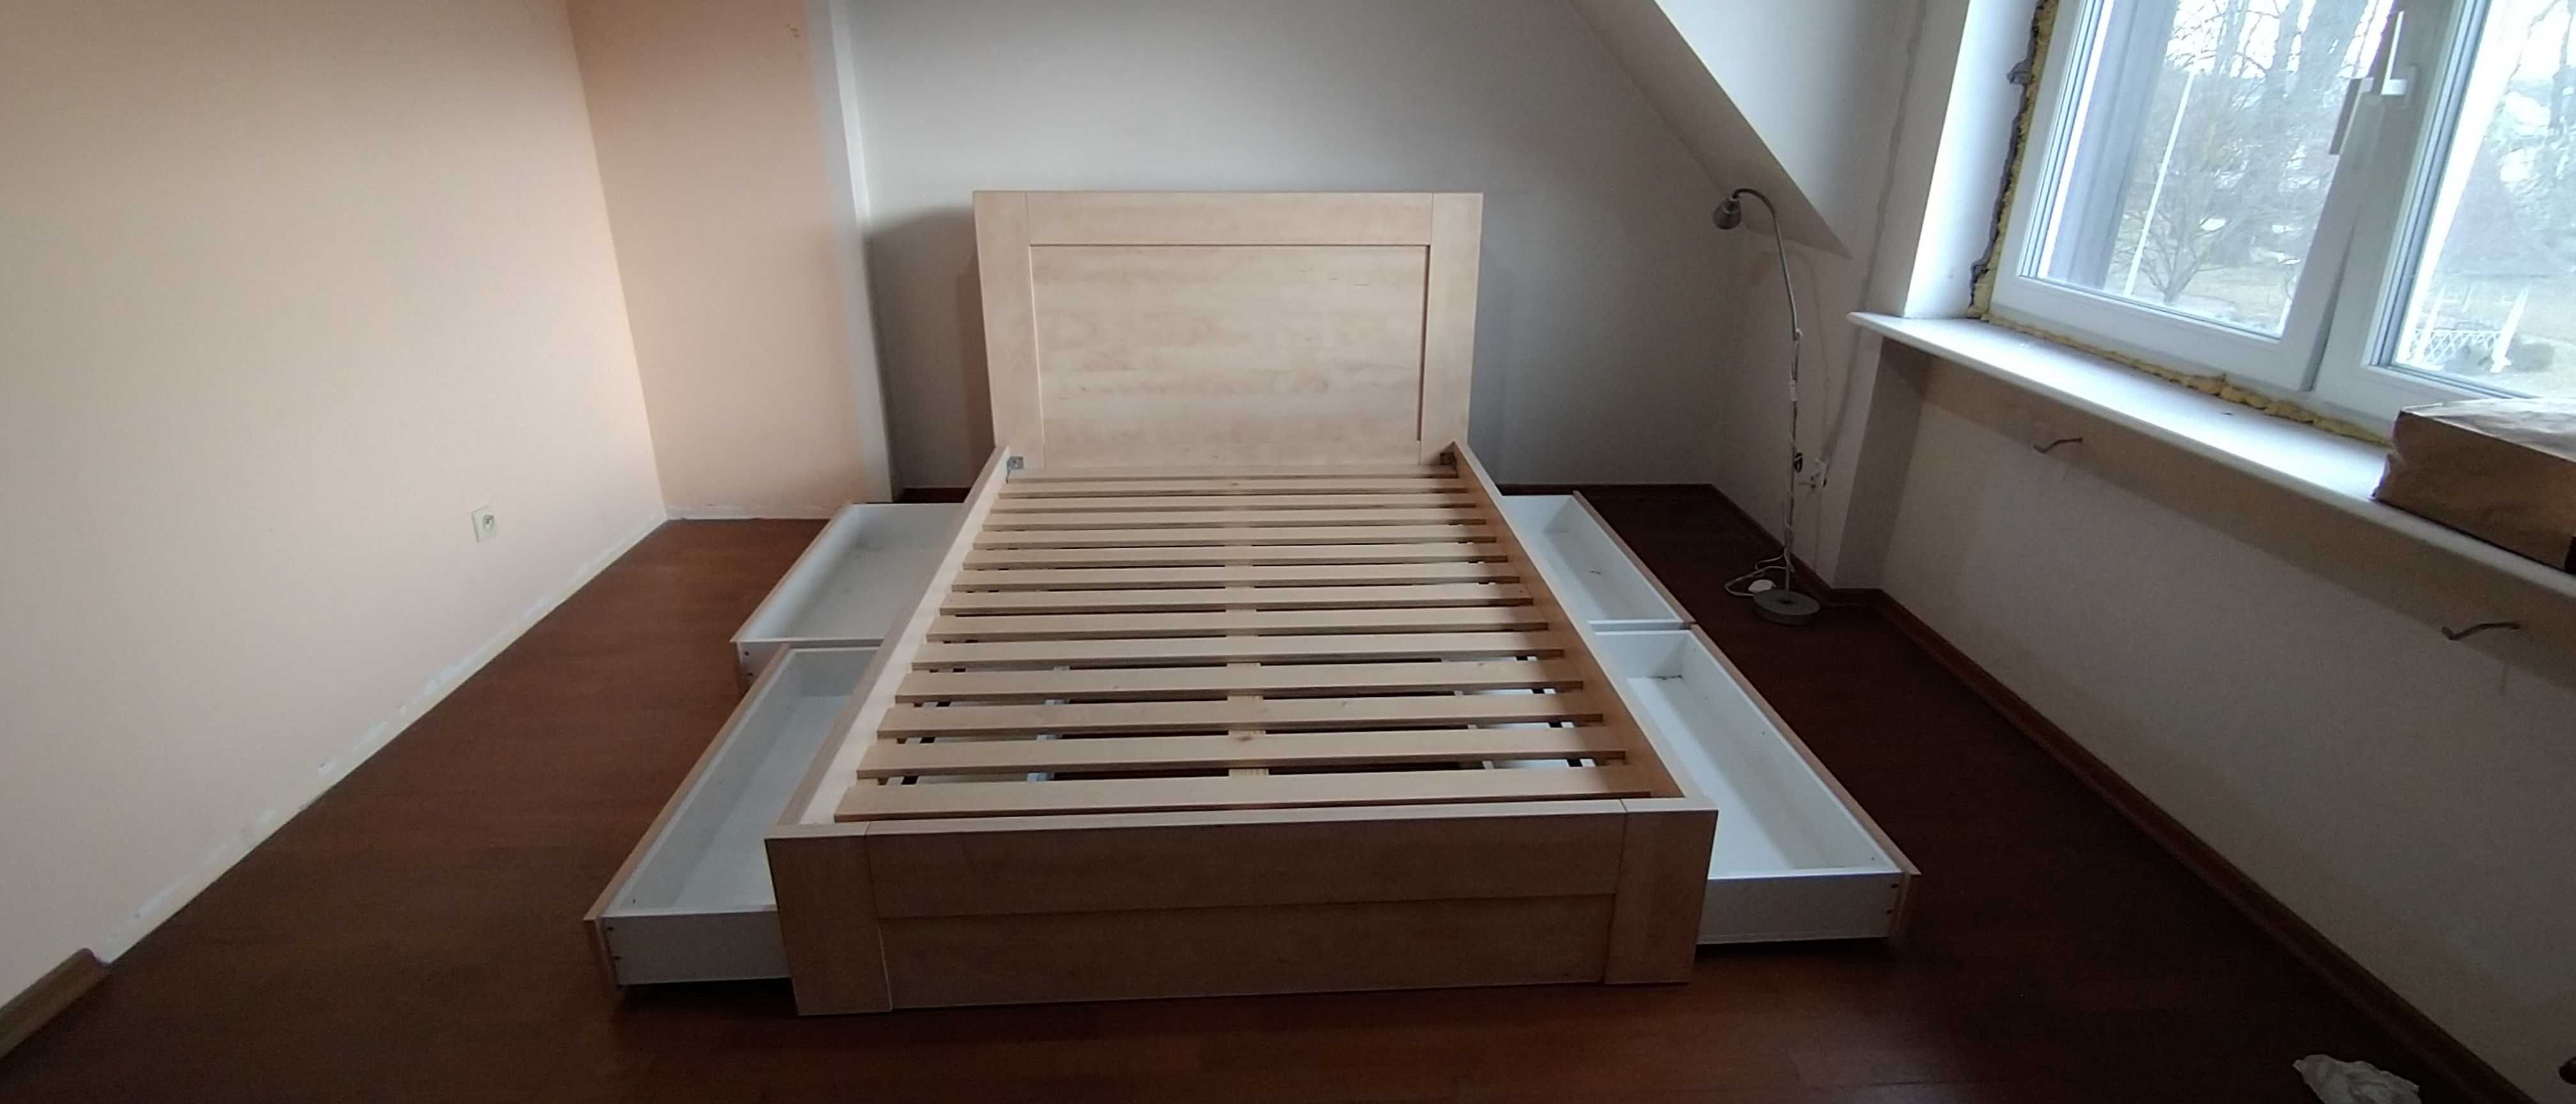 Łóżko 140cmx200cm